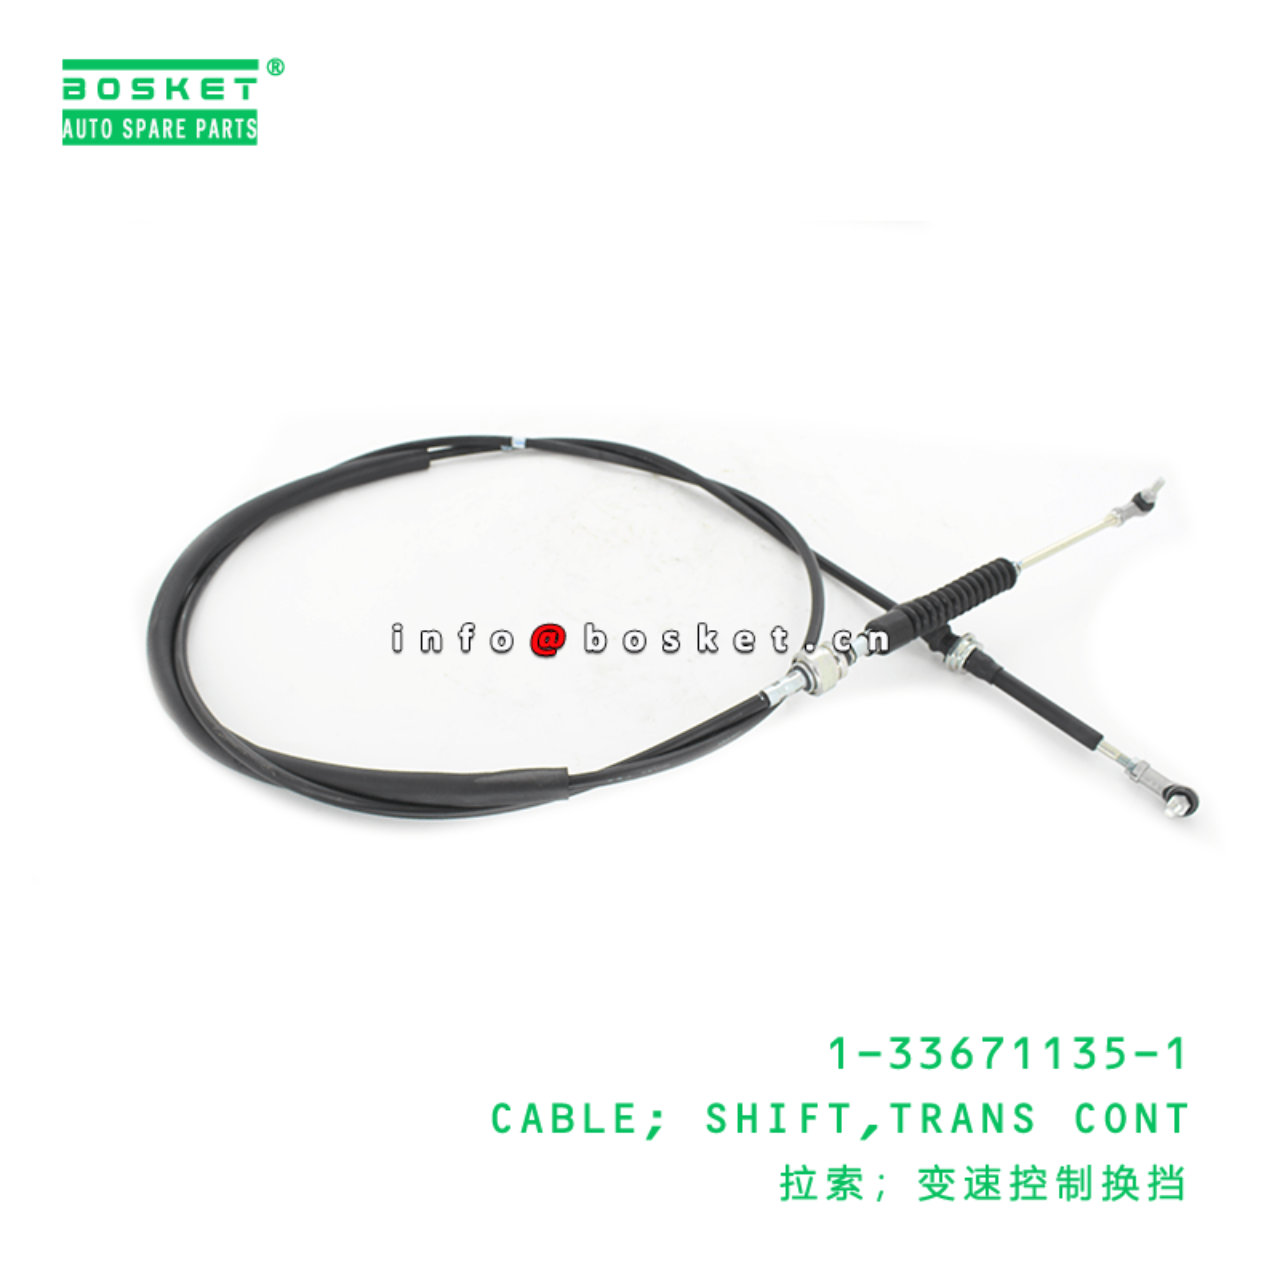 1-33671135-1 Transmission Control Shift Cable Suitable for ISUZU FRR FSR 1336711351